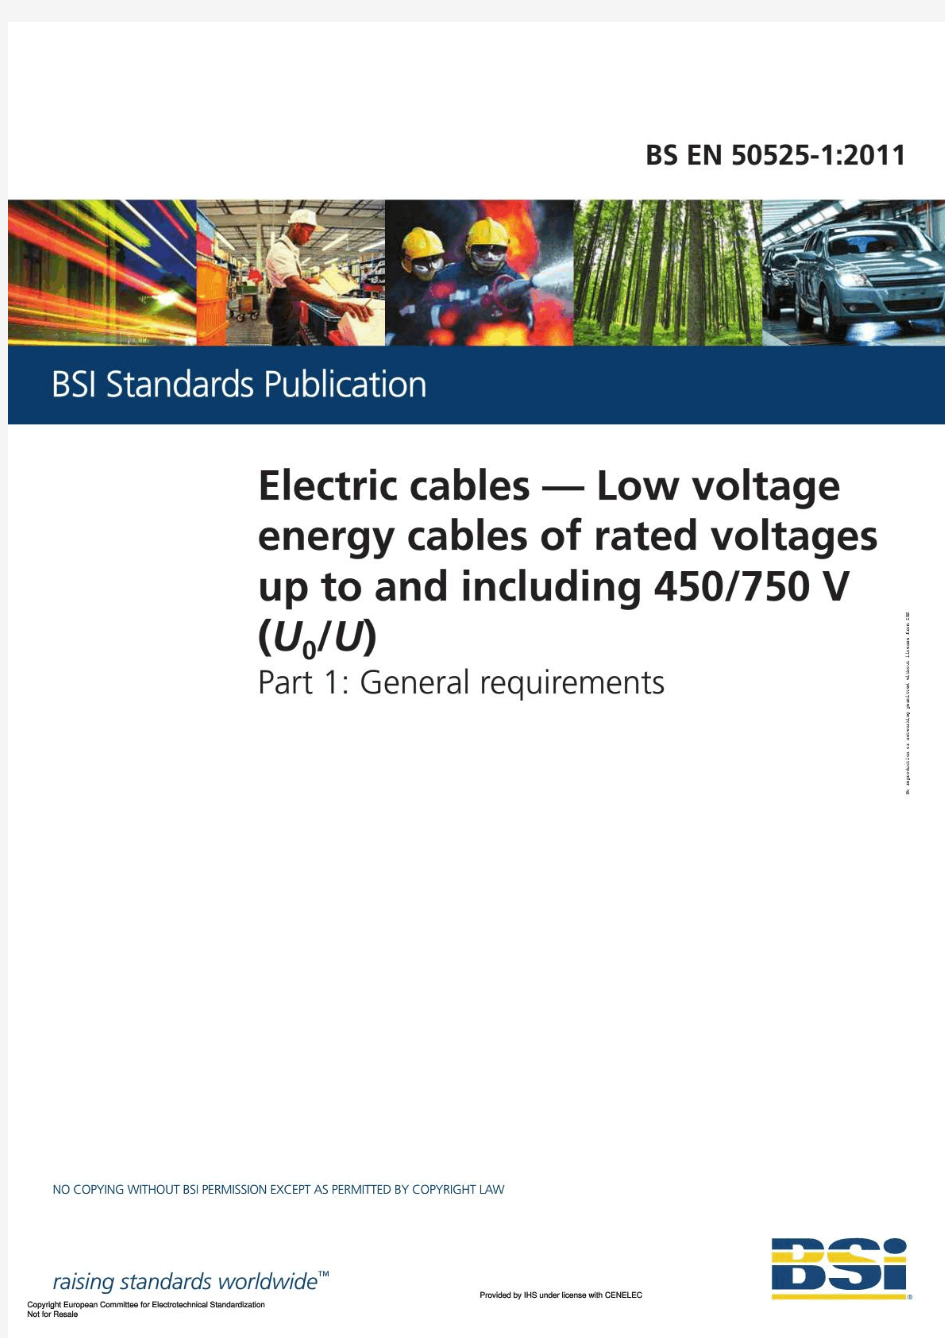 BS EN 50525-1-2011 Electric Cable - Low voltage energy cables